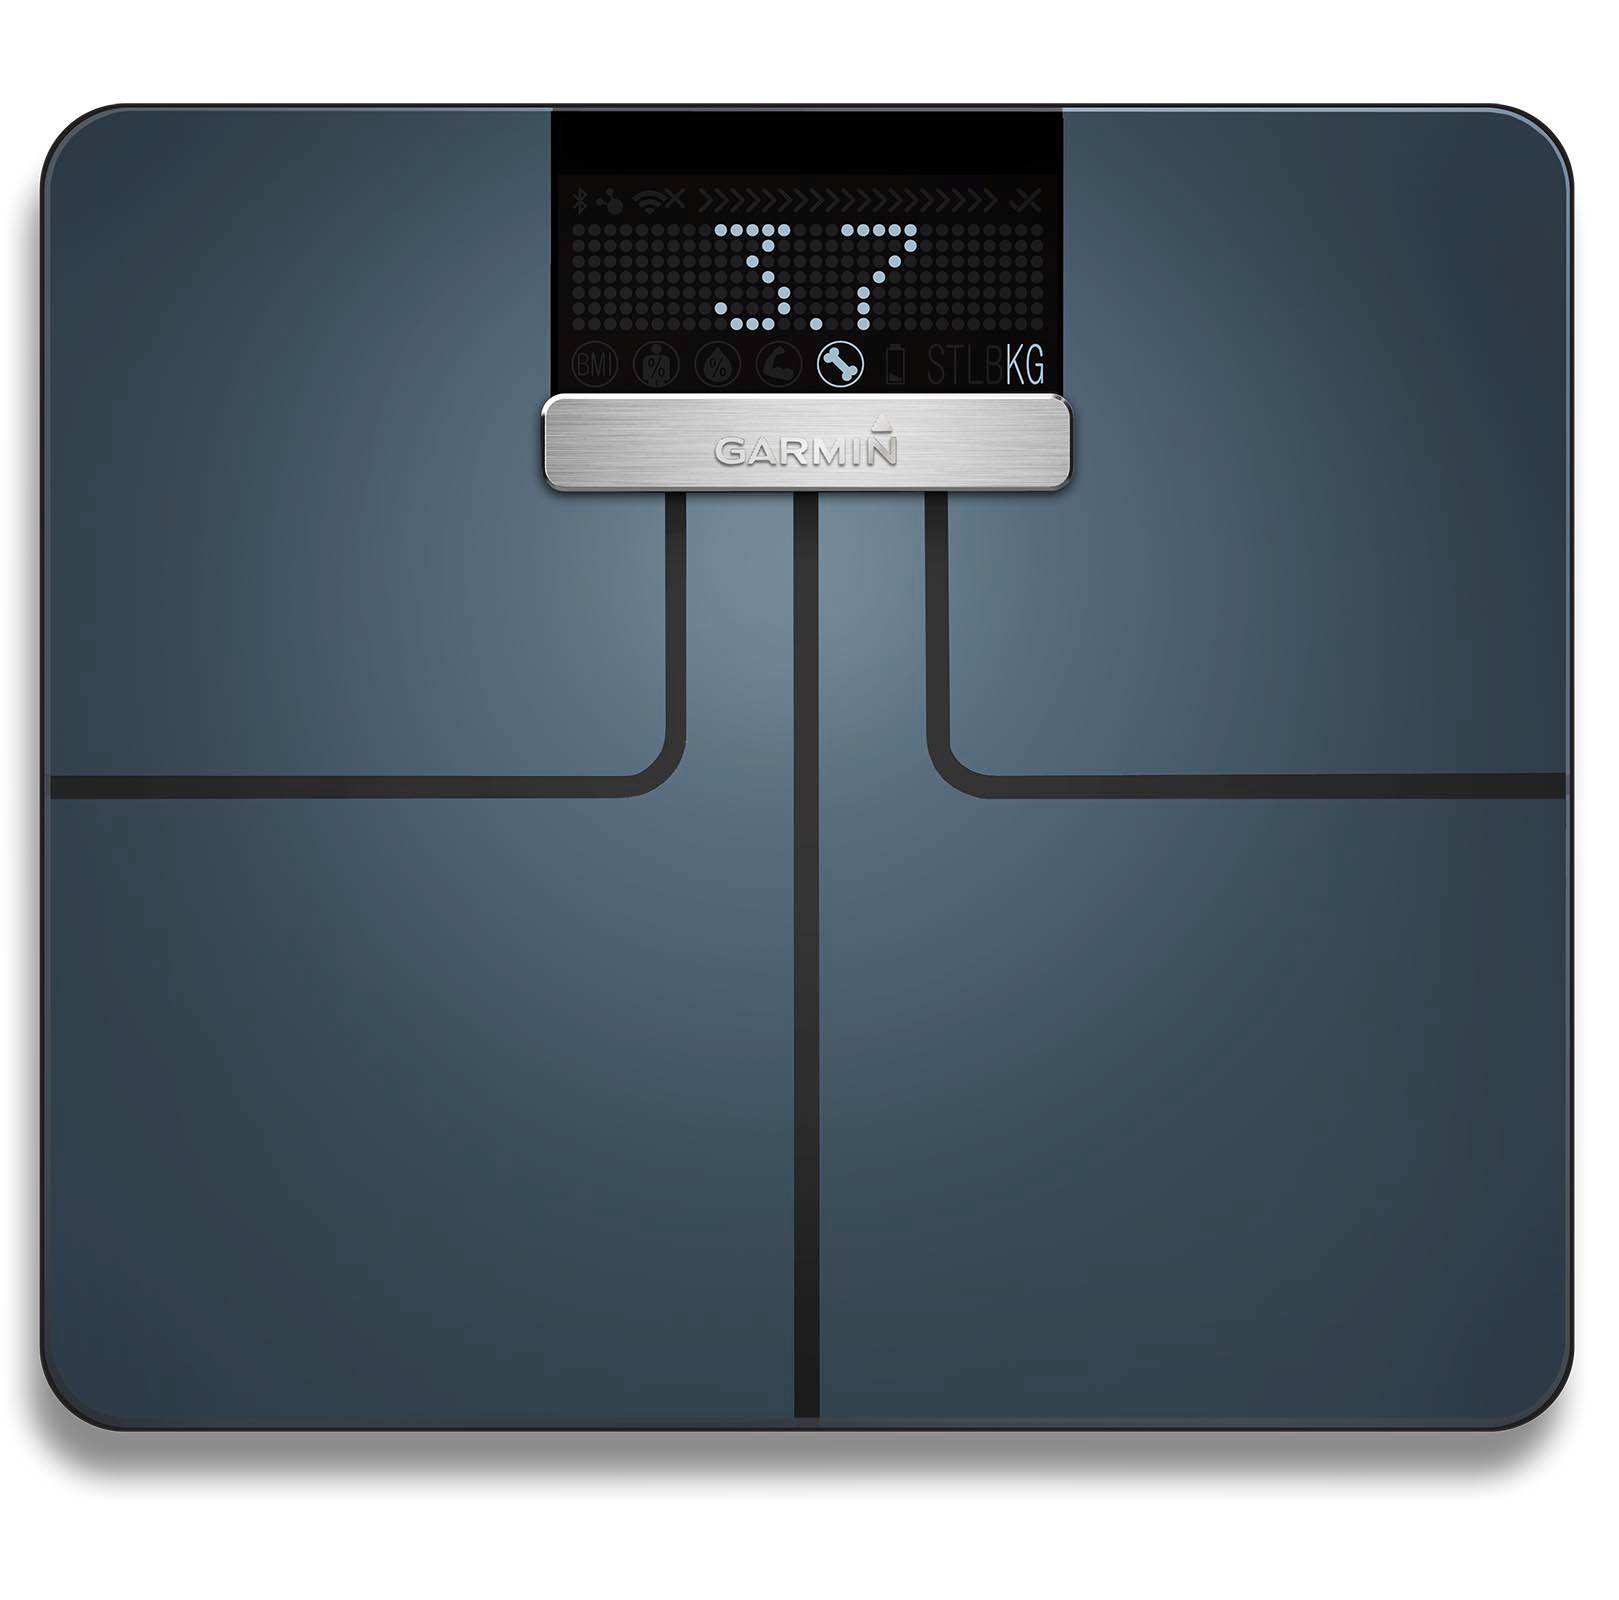 Garmin Index Smart WiFi Bluetooth BMI Calculator Digital Weight Scale, Black - image 4 of 9